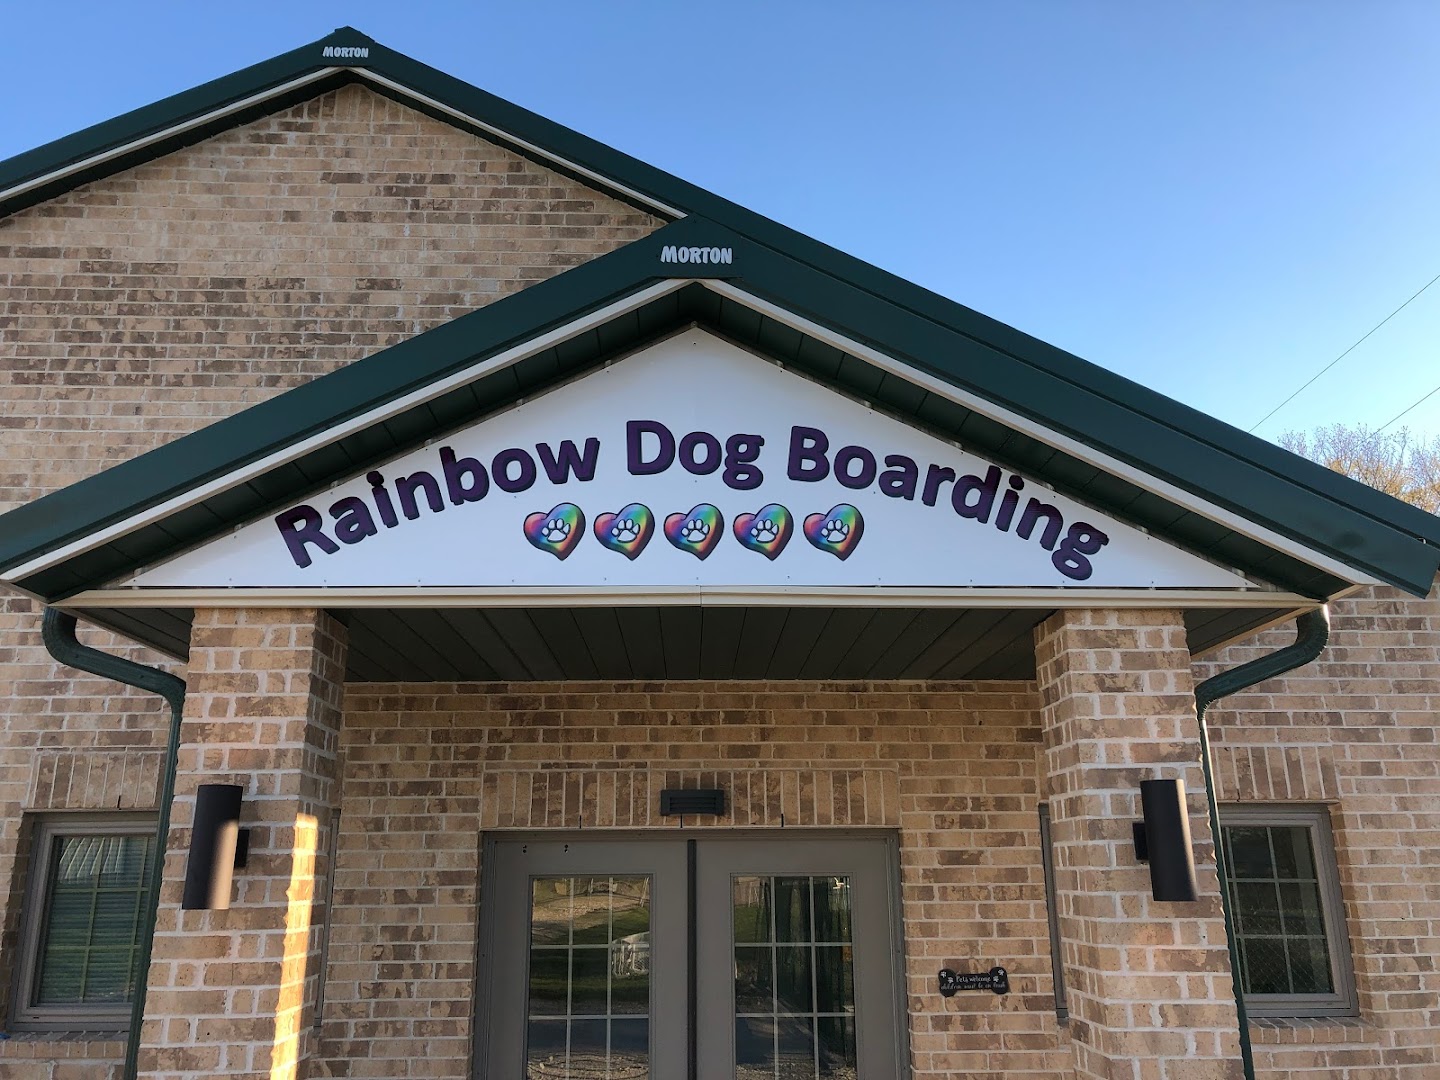 Rainbow Dog Boarding